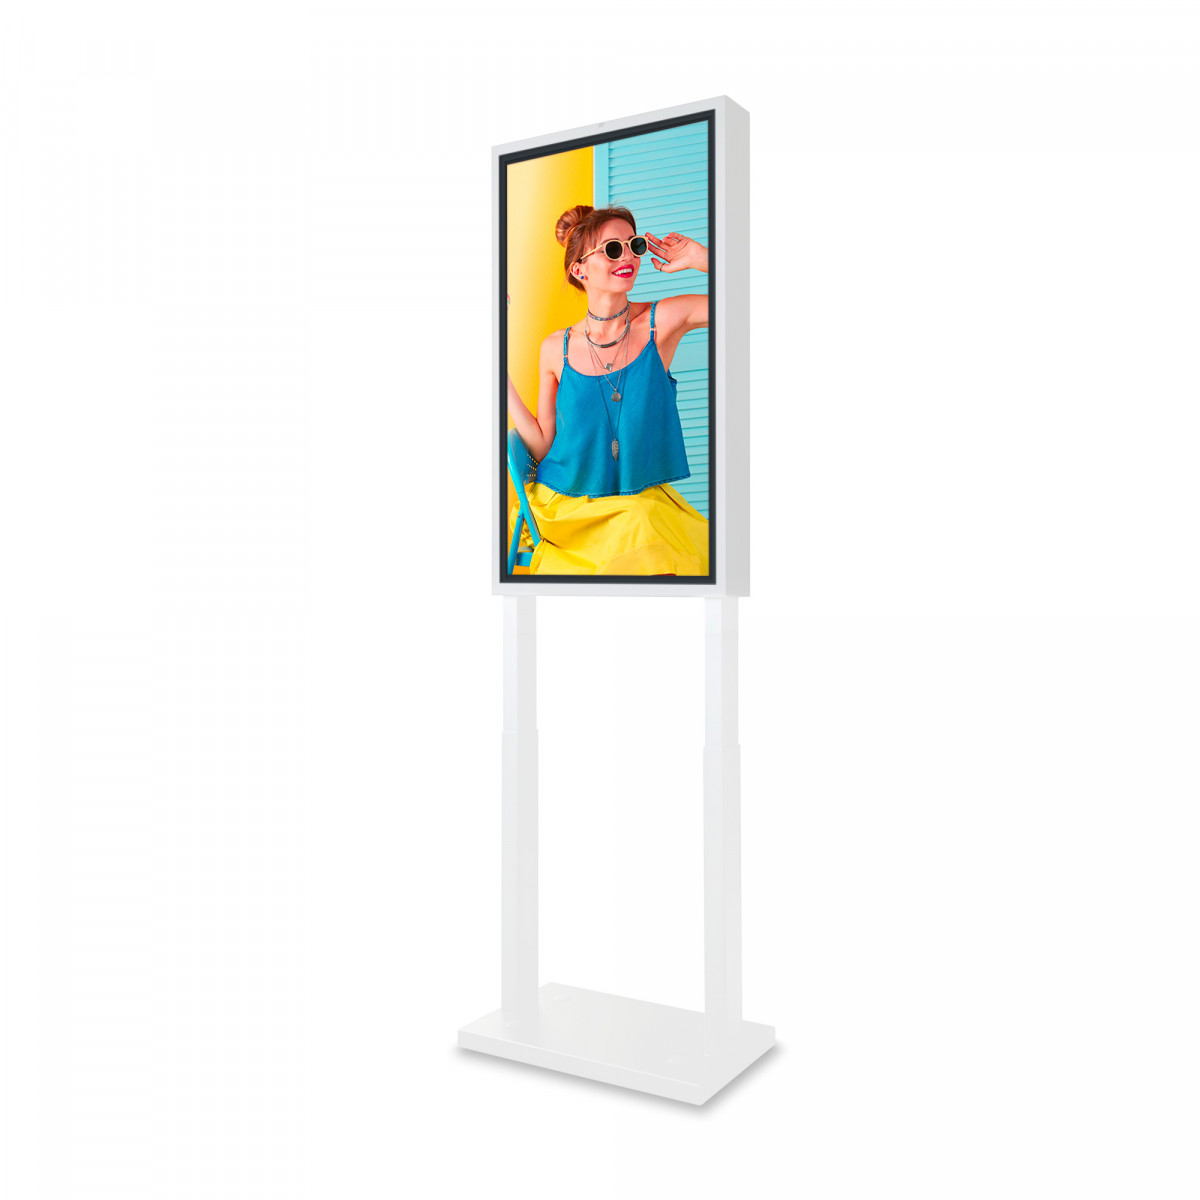 Ecrã LCD de 43" FULL HD para publicidade em montras - Android - Indoor- cor branca